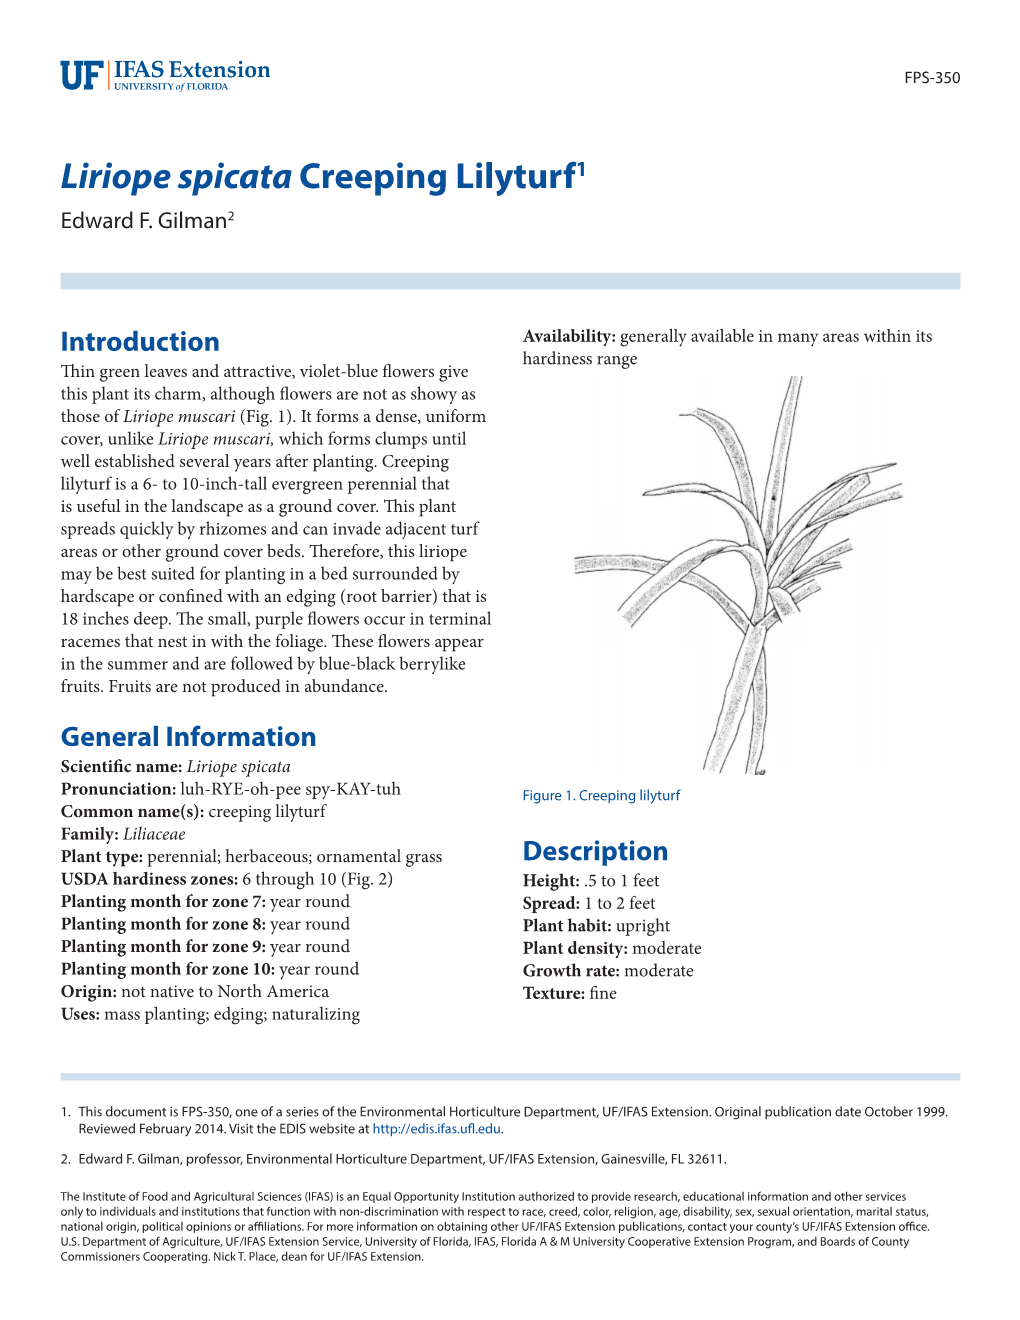 Liriope Spicata Creeping Lilyturf1 Edward F